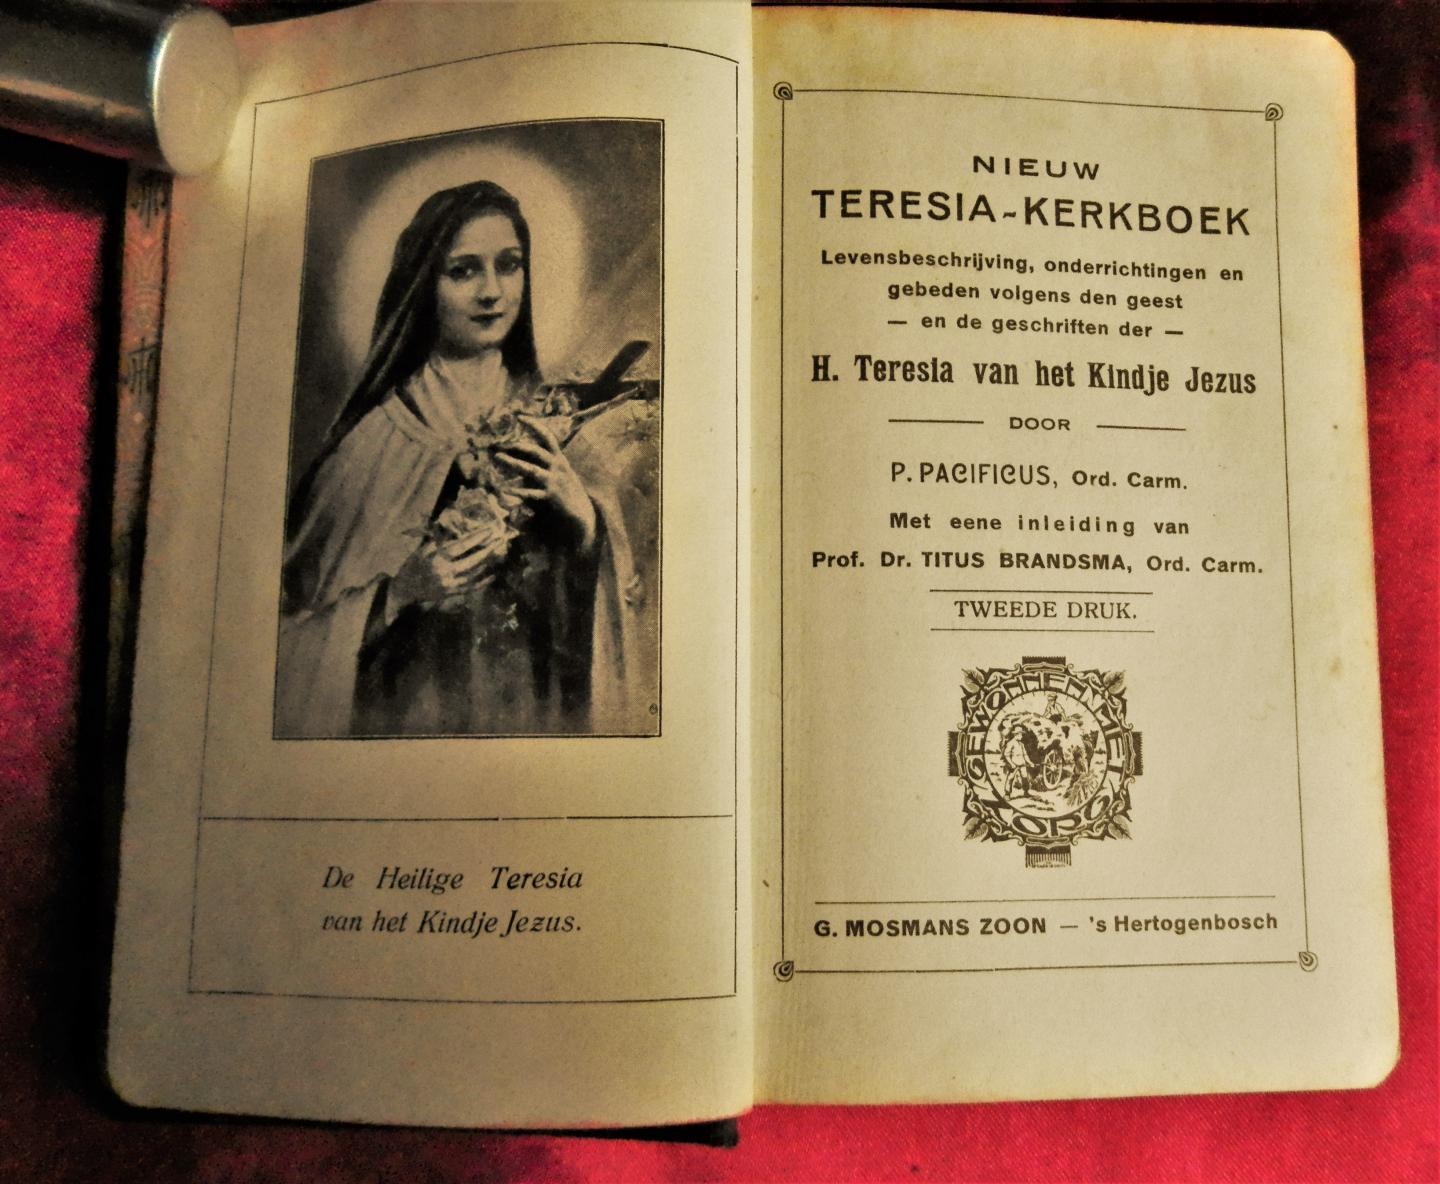 Brandsma, Titus / Pacificus, P. - Nieuw Teresia-Kerkboek